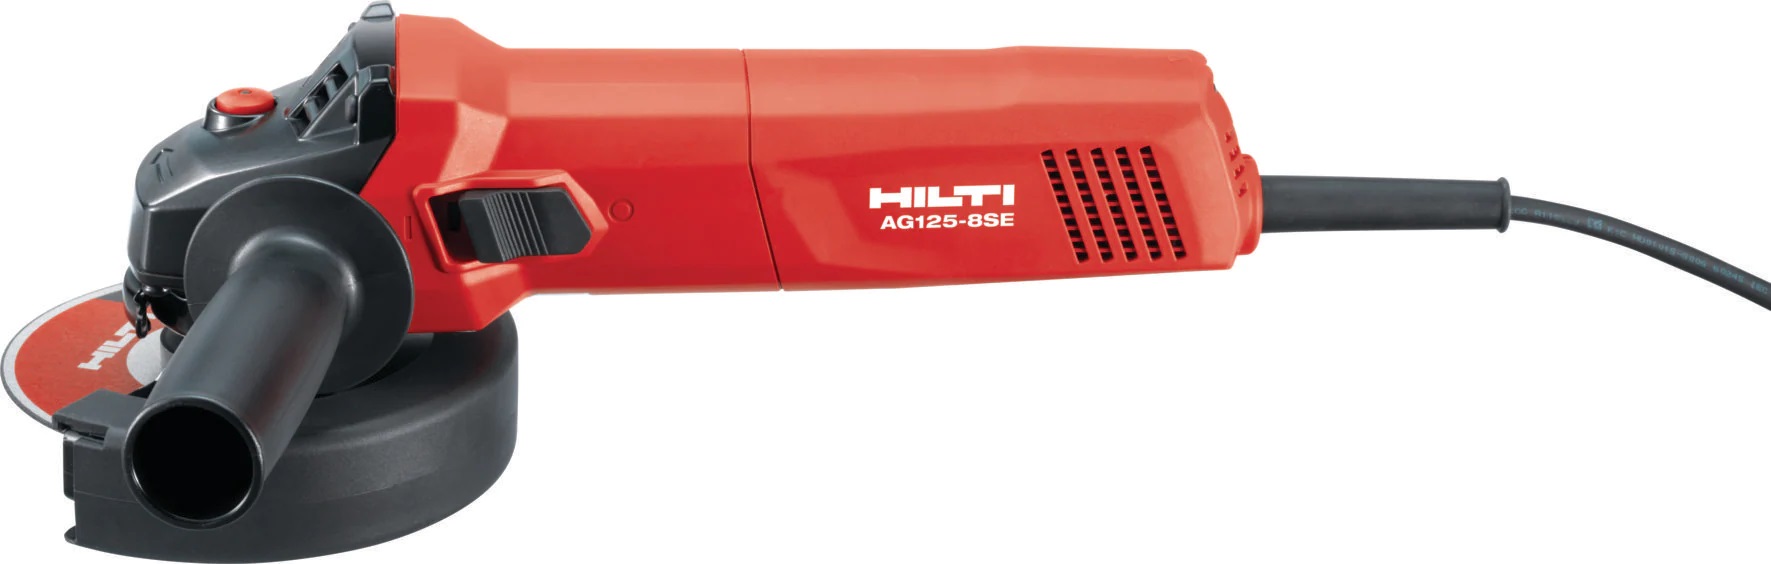 Bruska úhlová Hilti AG-125-SE + 10× kotouč HILTI